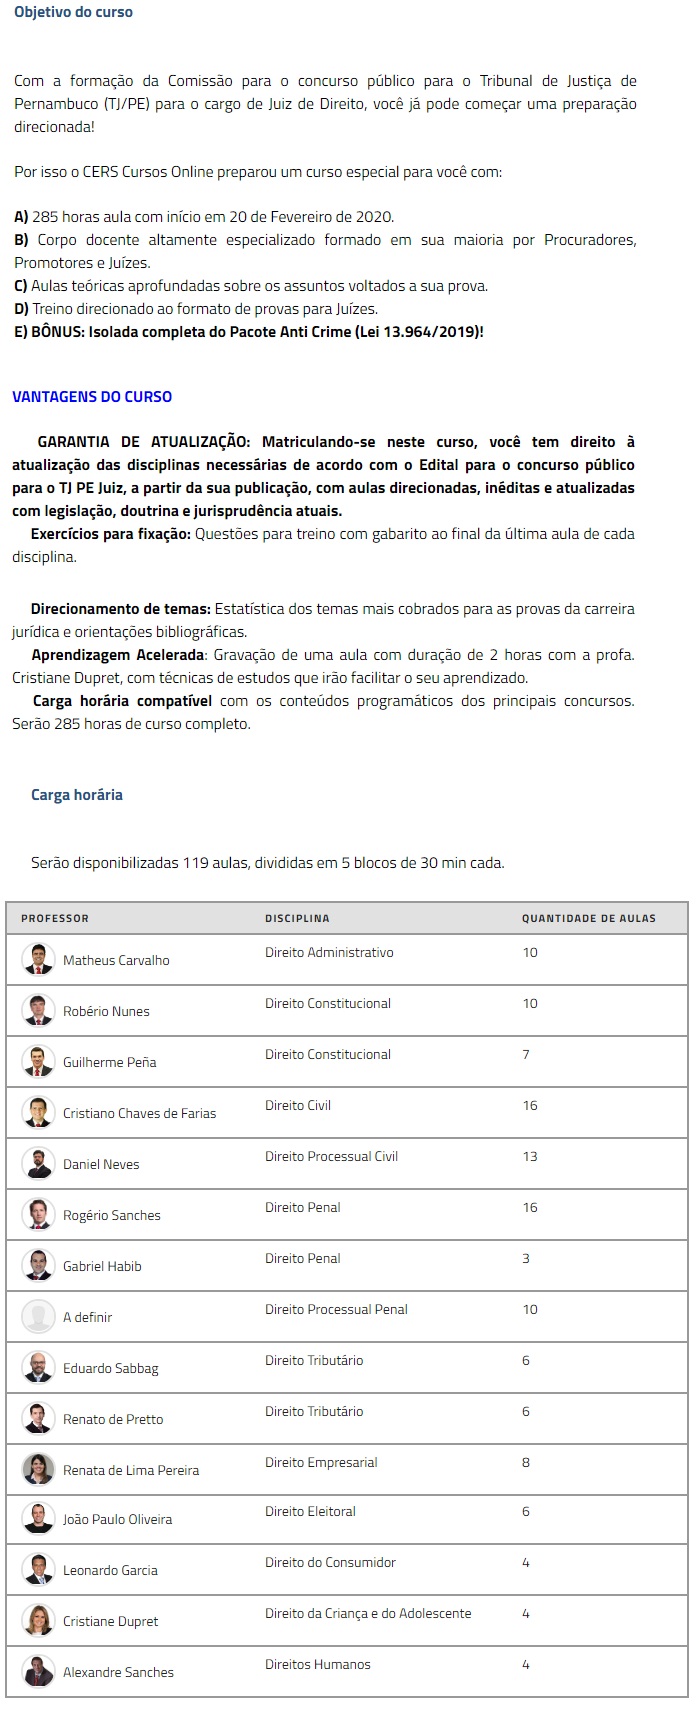 Rateio TJ PE Juiz Substituto - PÓS EDITAL (CERS 2020) Tribunal de Justiça de Pernambuco 4